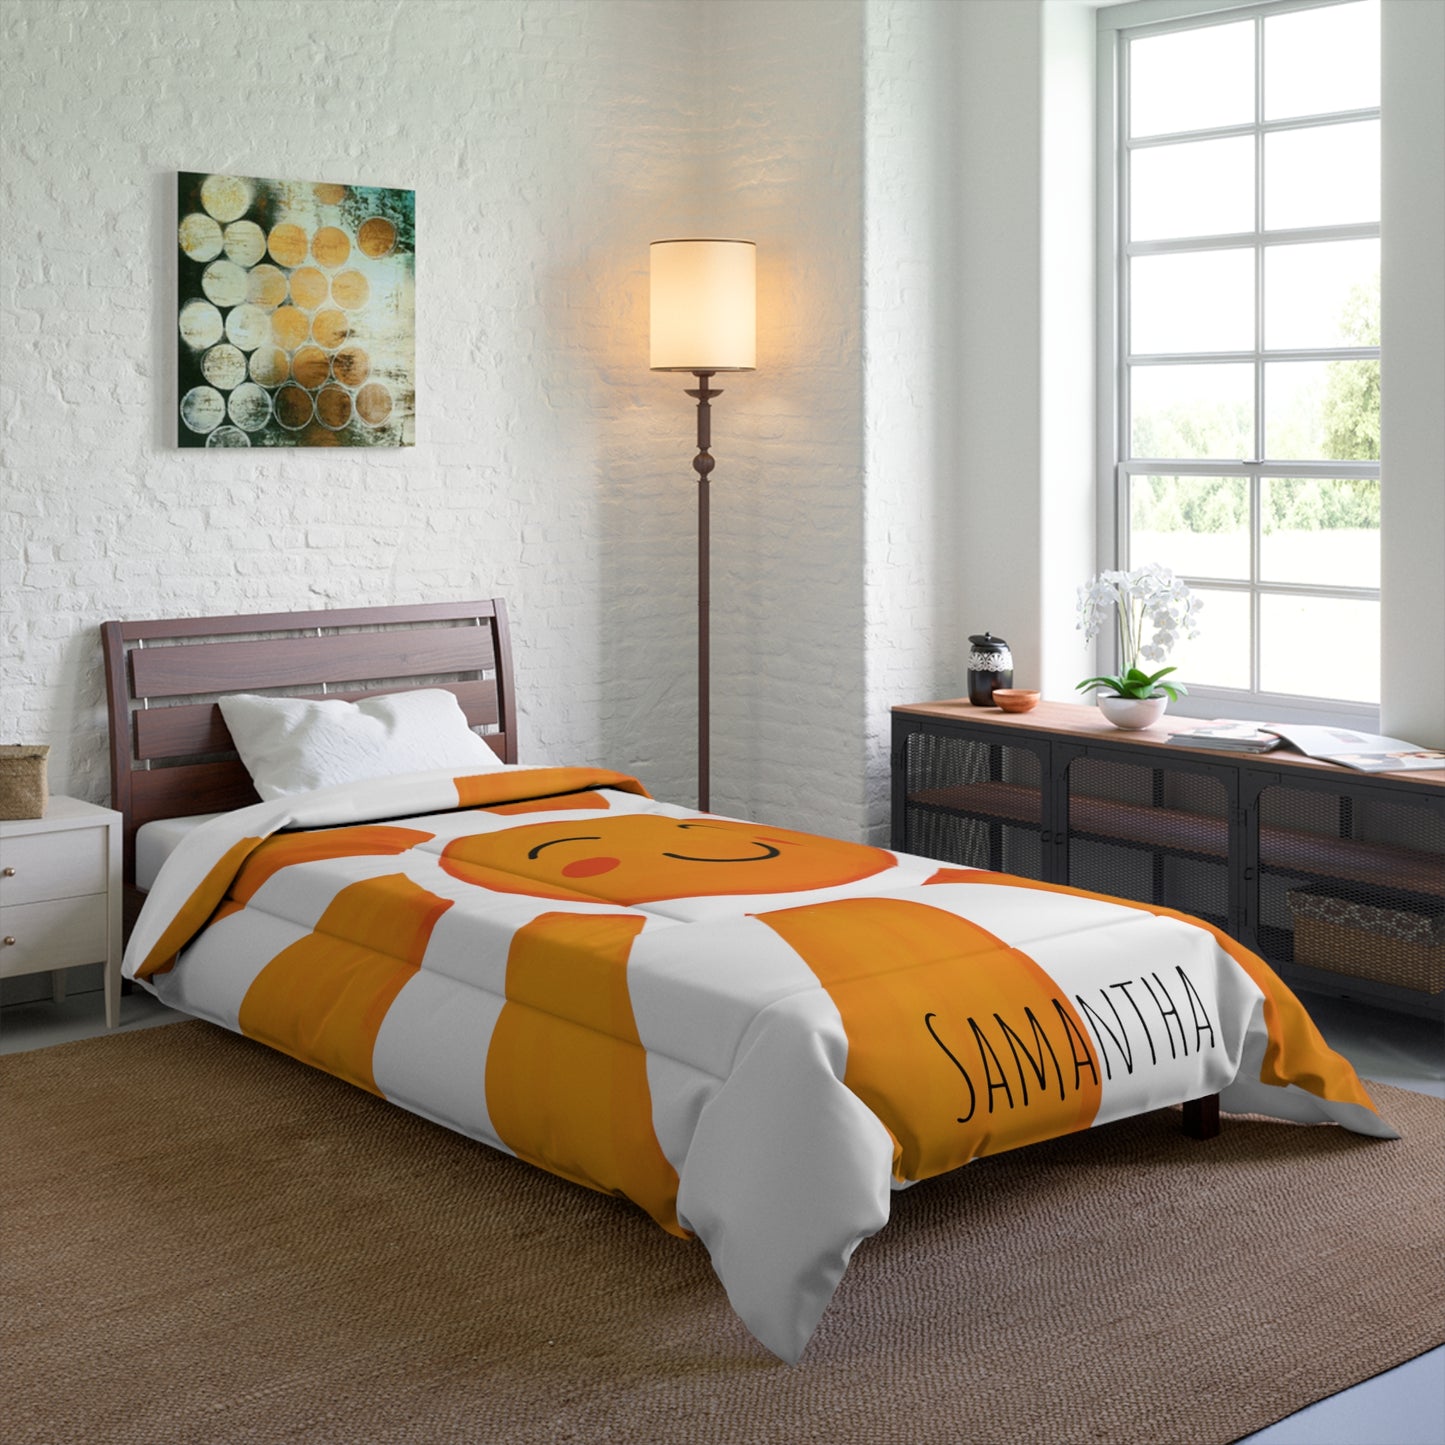 Sunshine Comforter, Cute Sun Bedspread, Quilted Bedspread